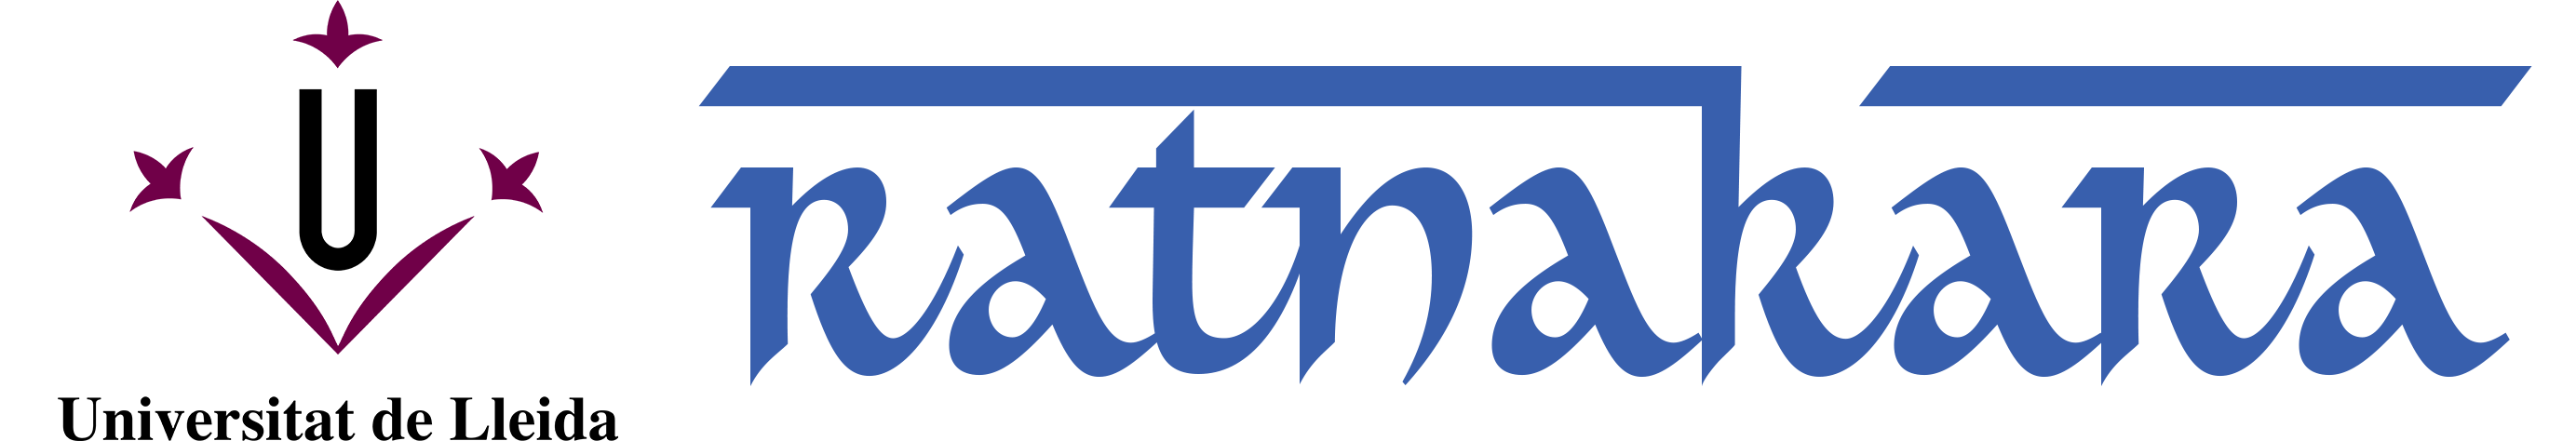 logo ratnakara+udl